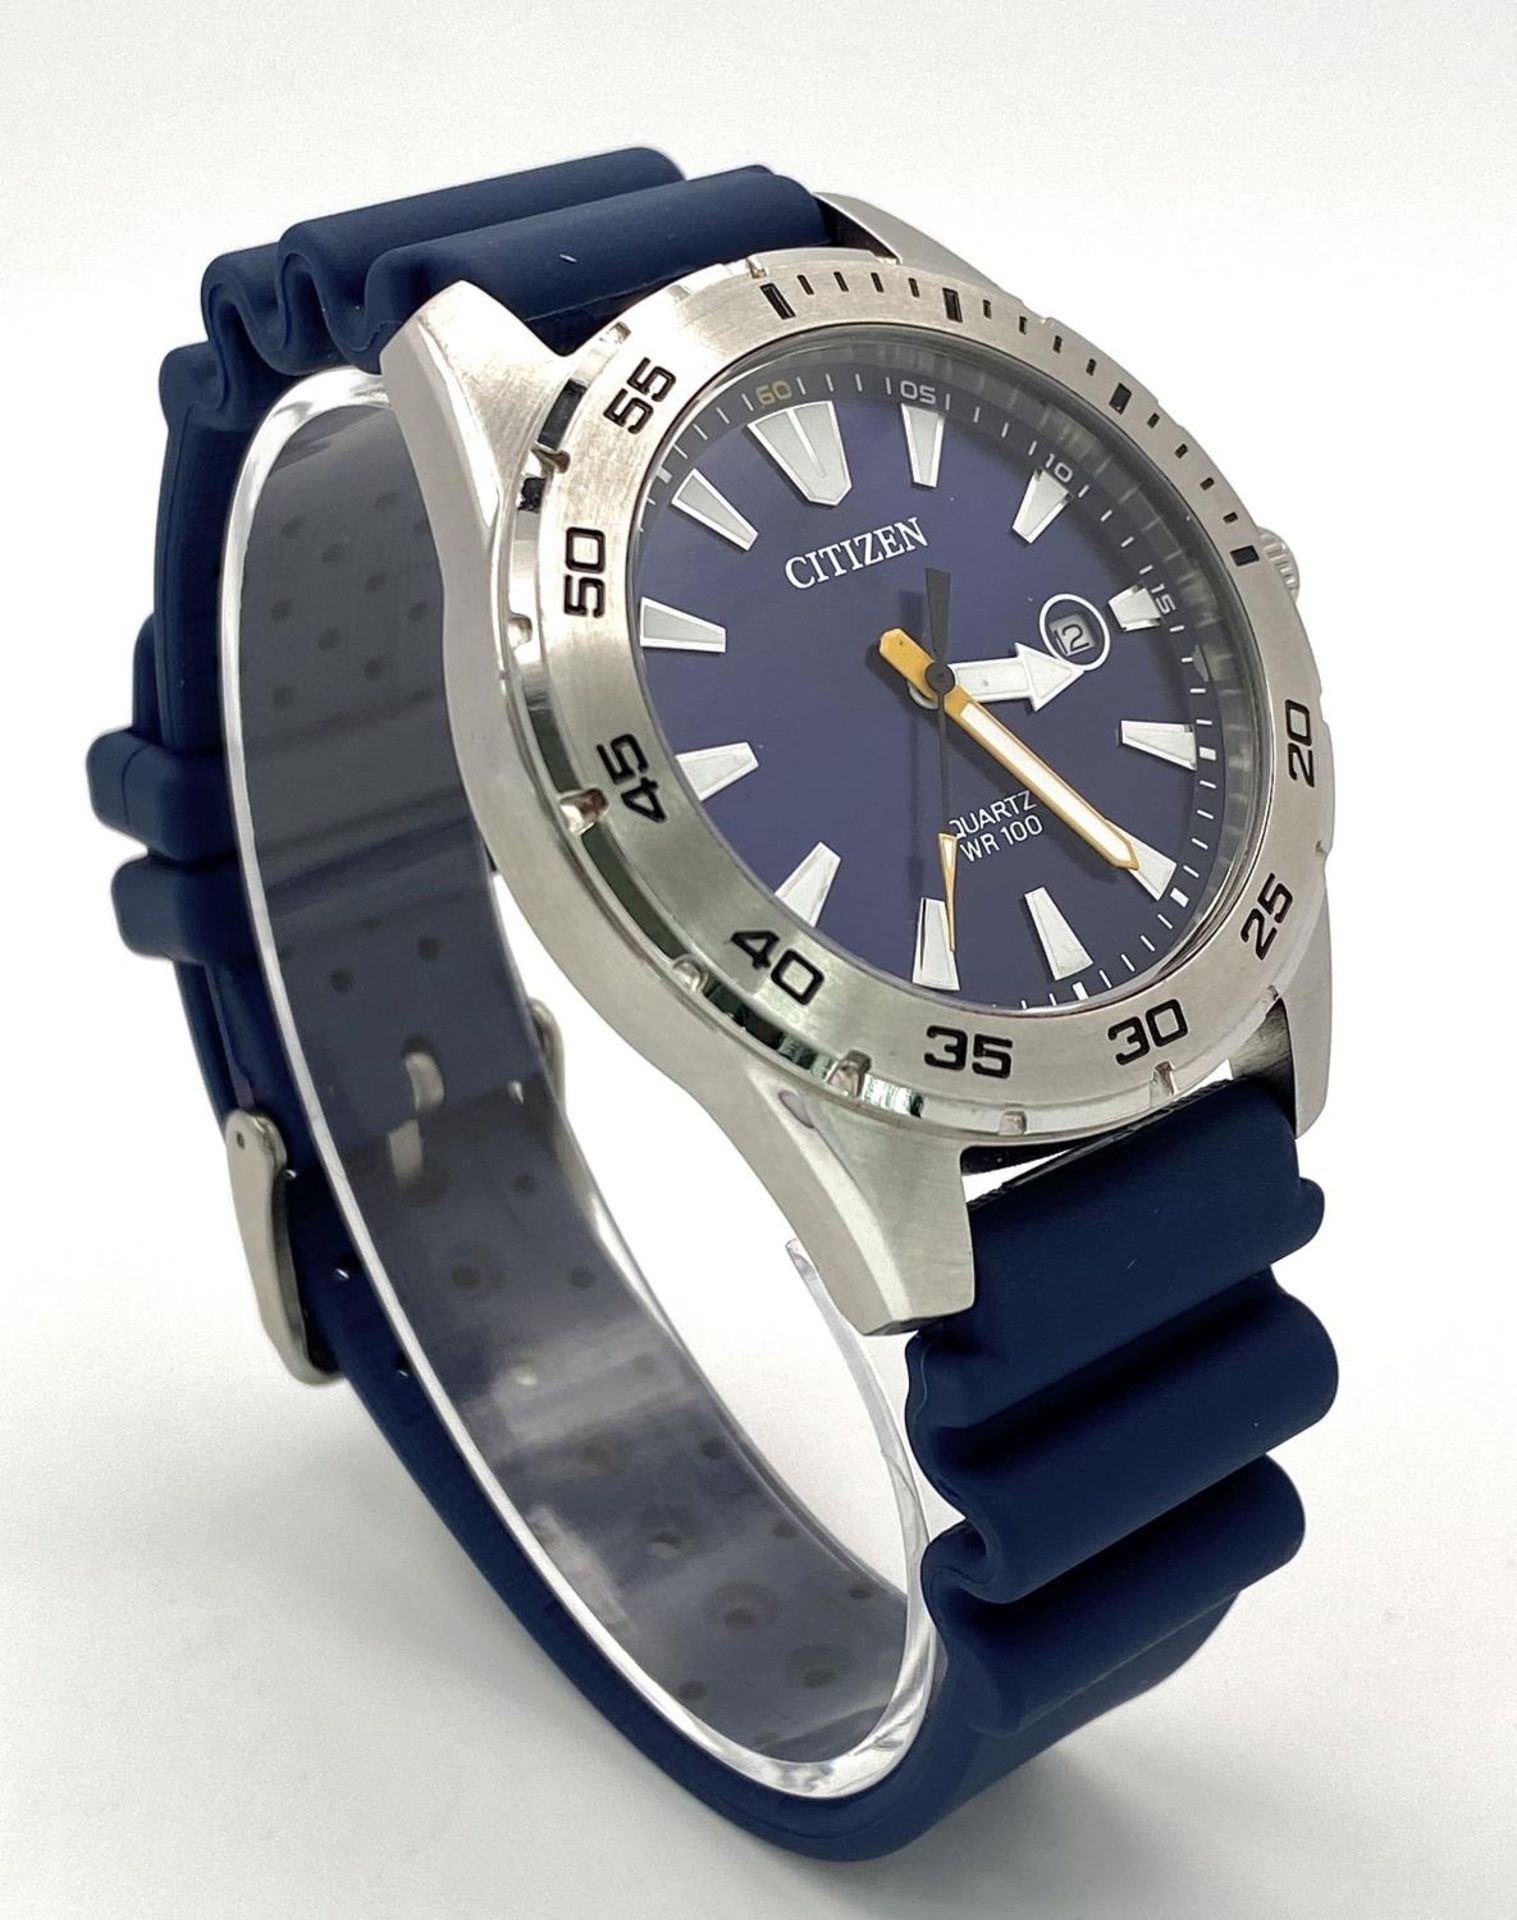 A Citizen Quartz Gents Watch. Blue rubber strap. Stainless steel case - 42mm. Blue dial with date - Bild 4 aus 6